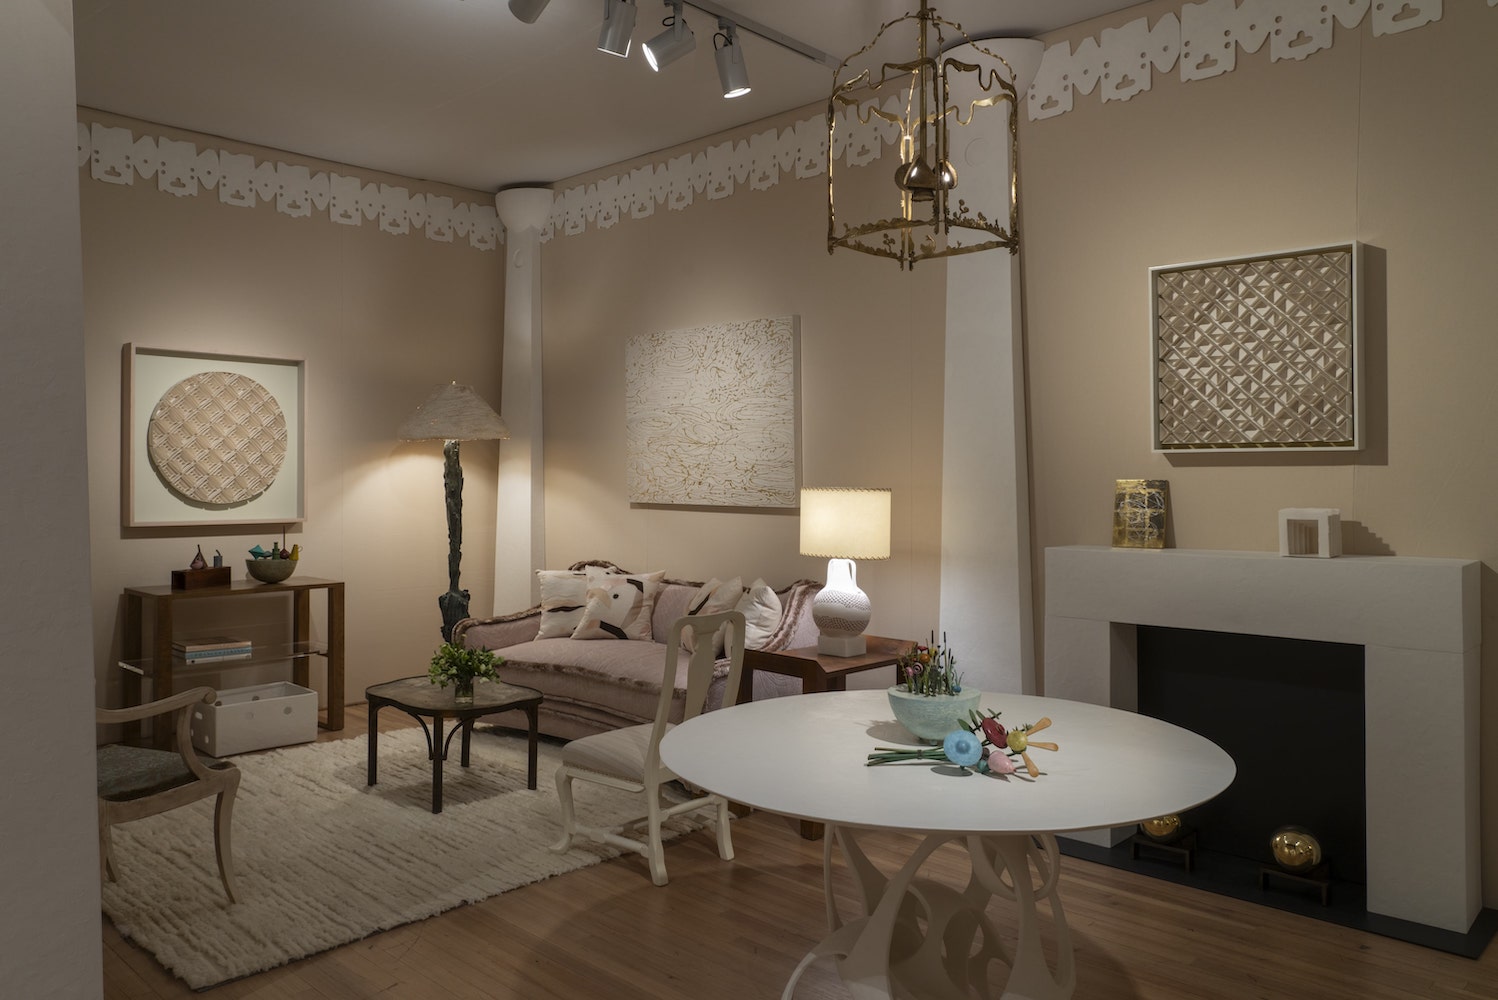 Liz OBrien's Living Room at Salon Art + Design